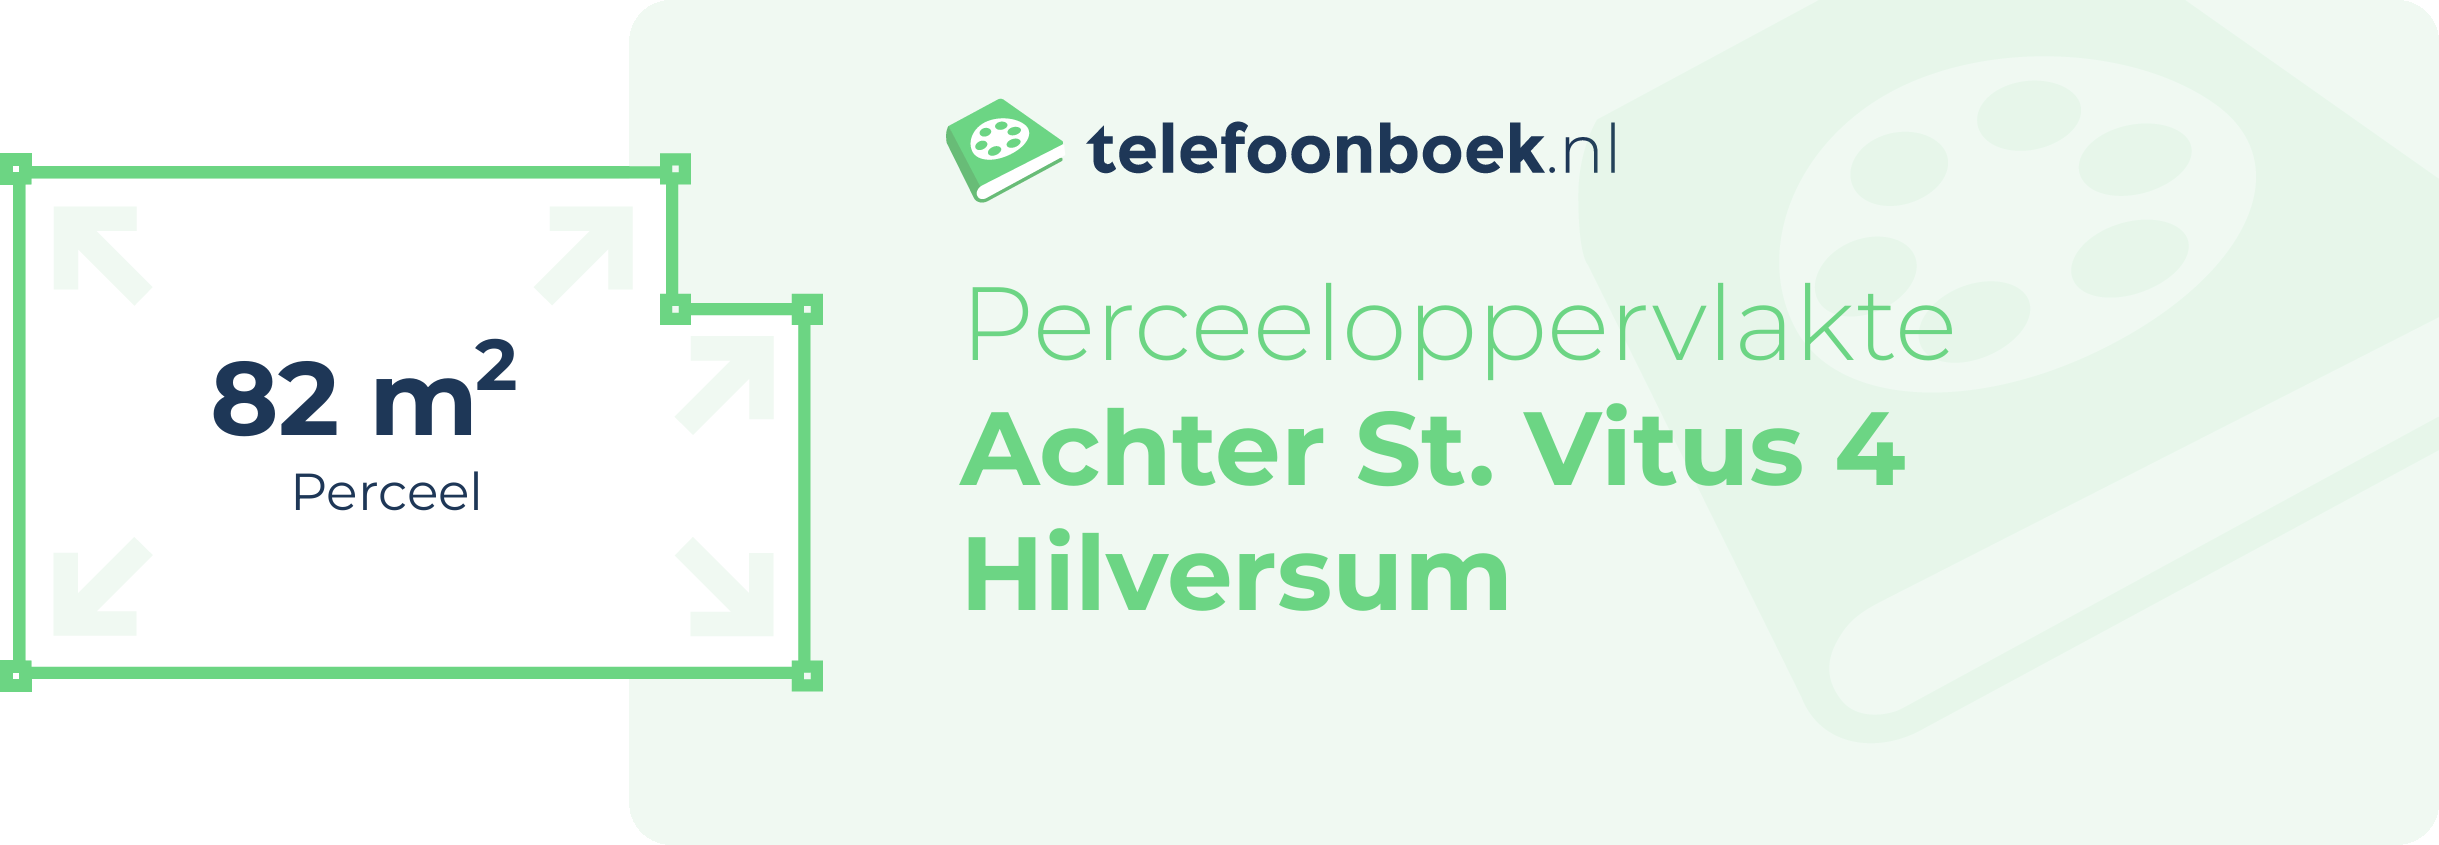 Perceeloppervlakte Achter St. Vitus 4 Hilversum